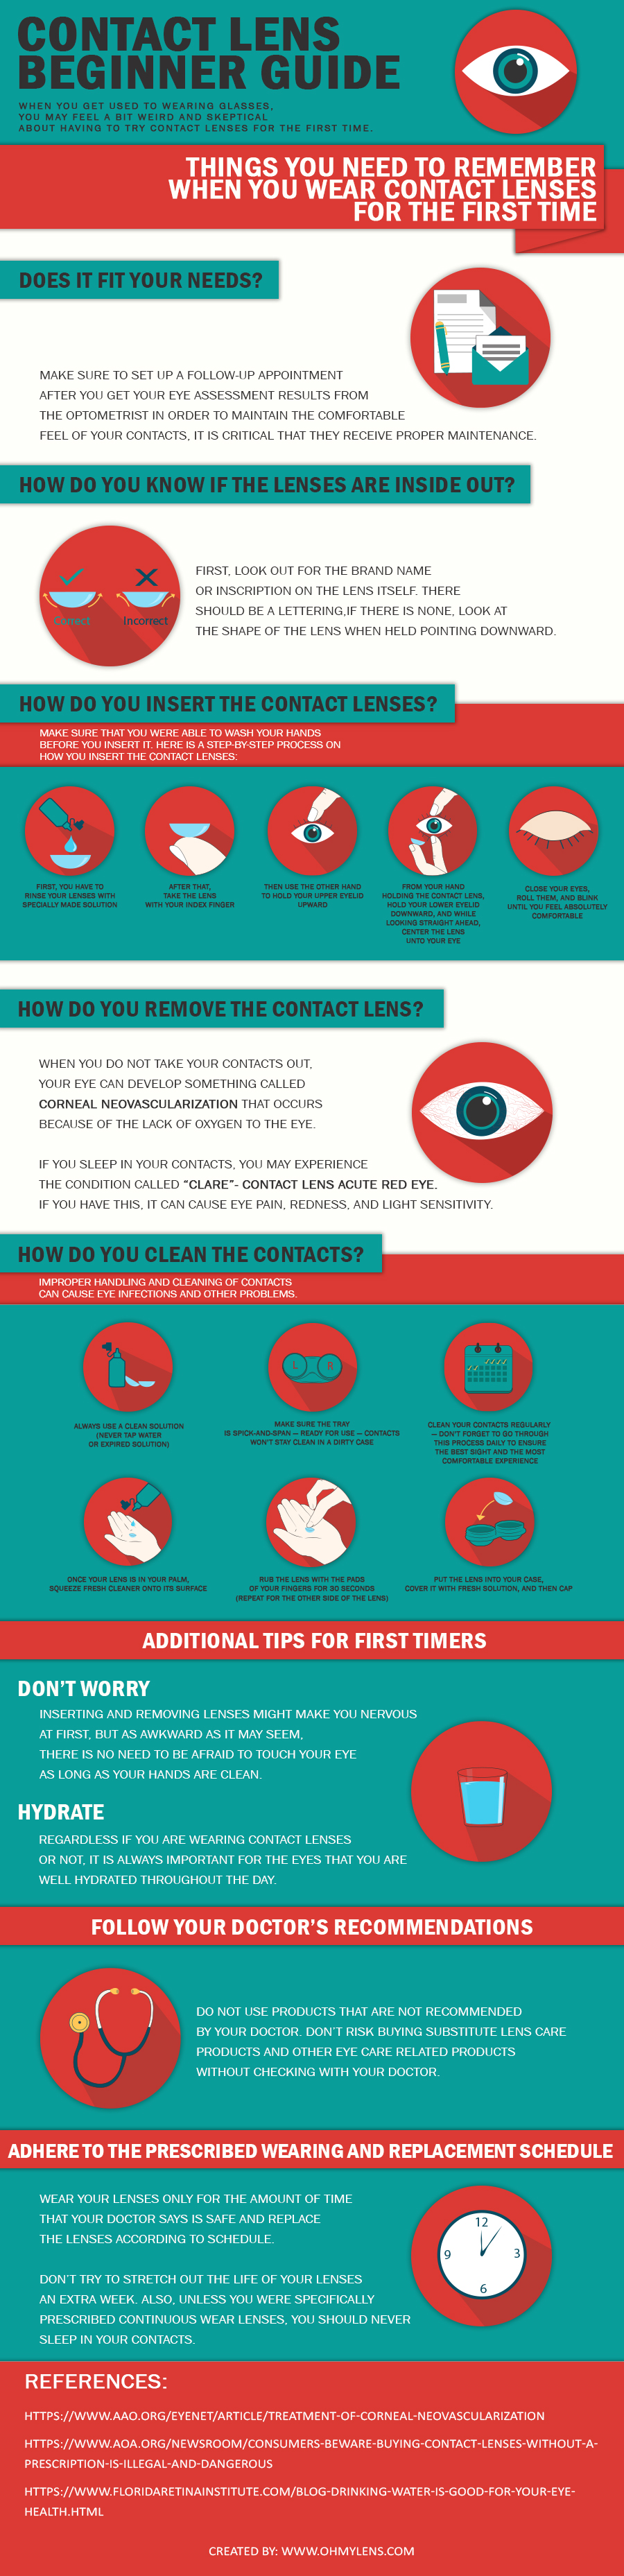 Contact Lens Begineer Guide